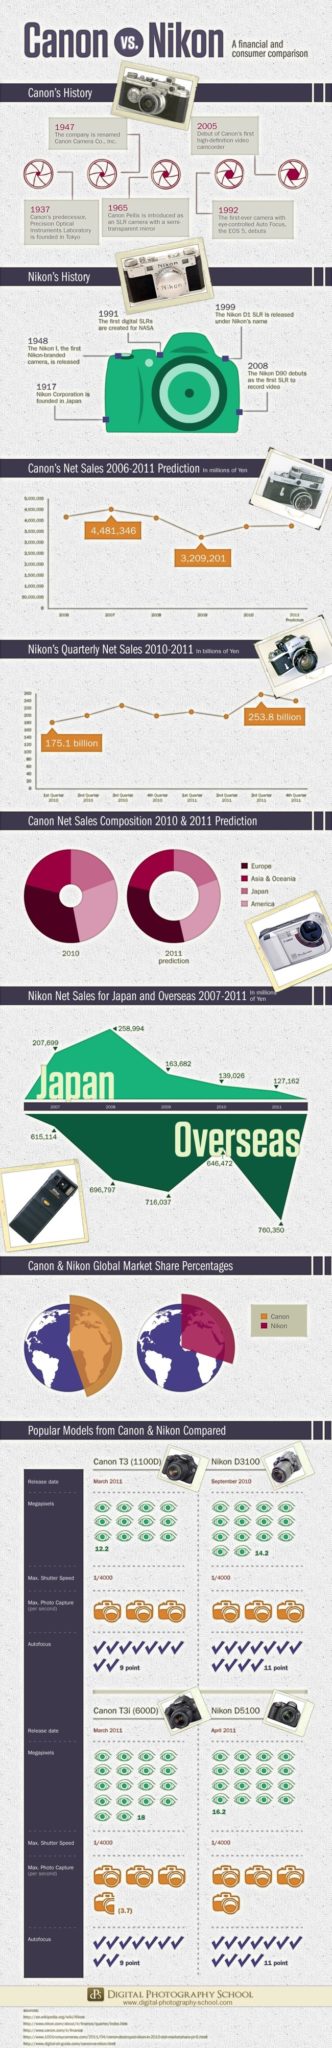 Canon vs. Nikon Infographic